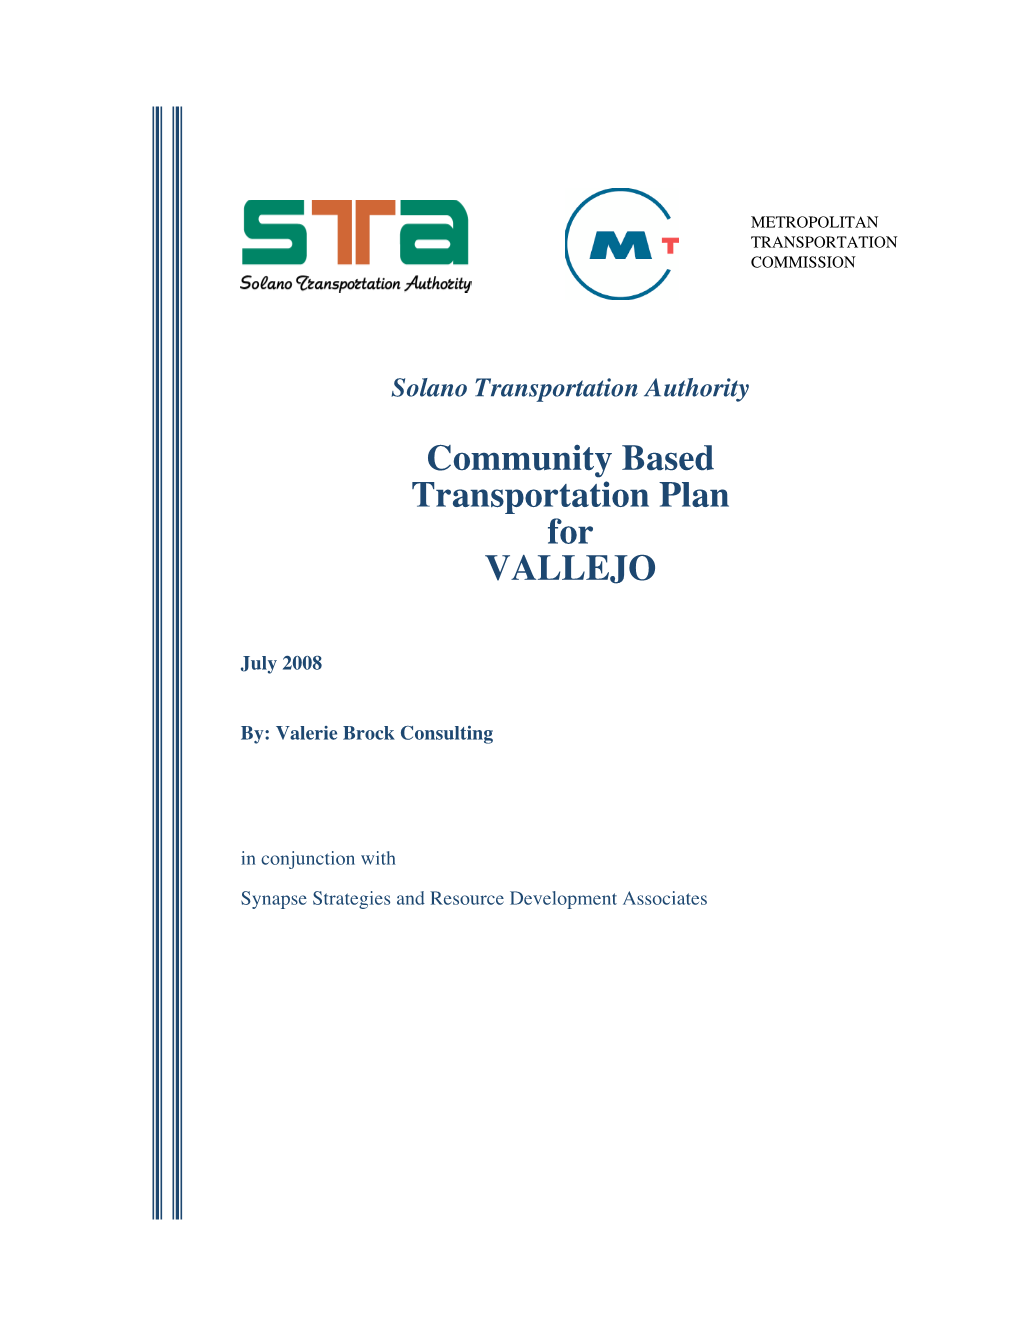 Community Based Transportation Plan for VALLEJO